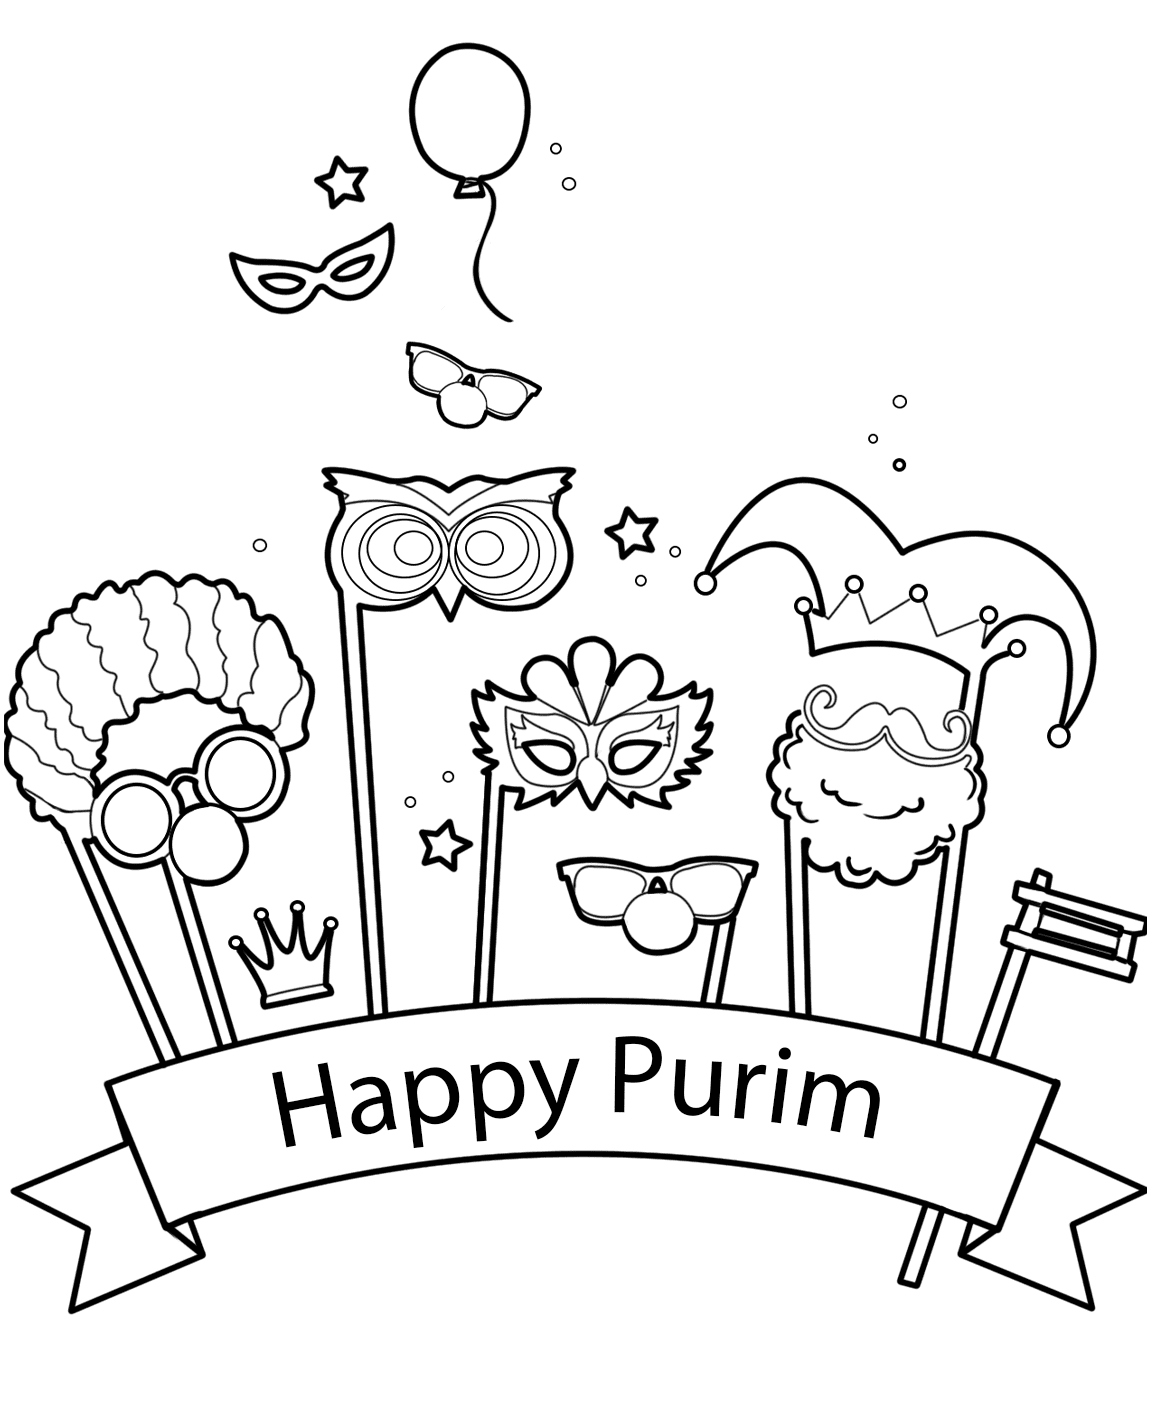 Happy Purim to Print from Purim